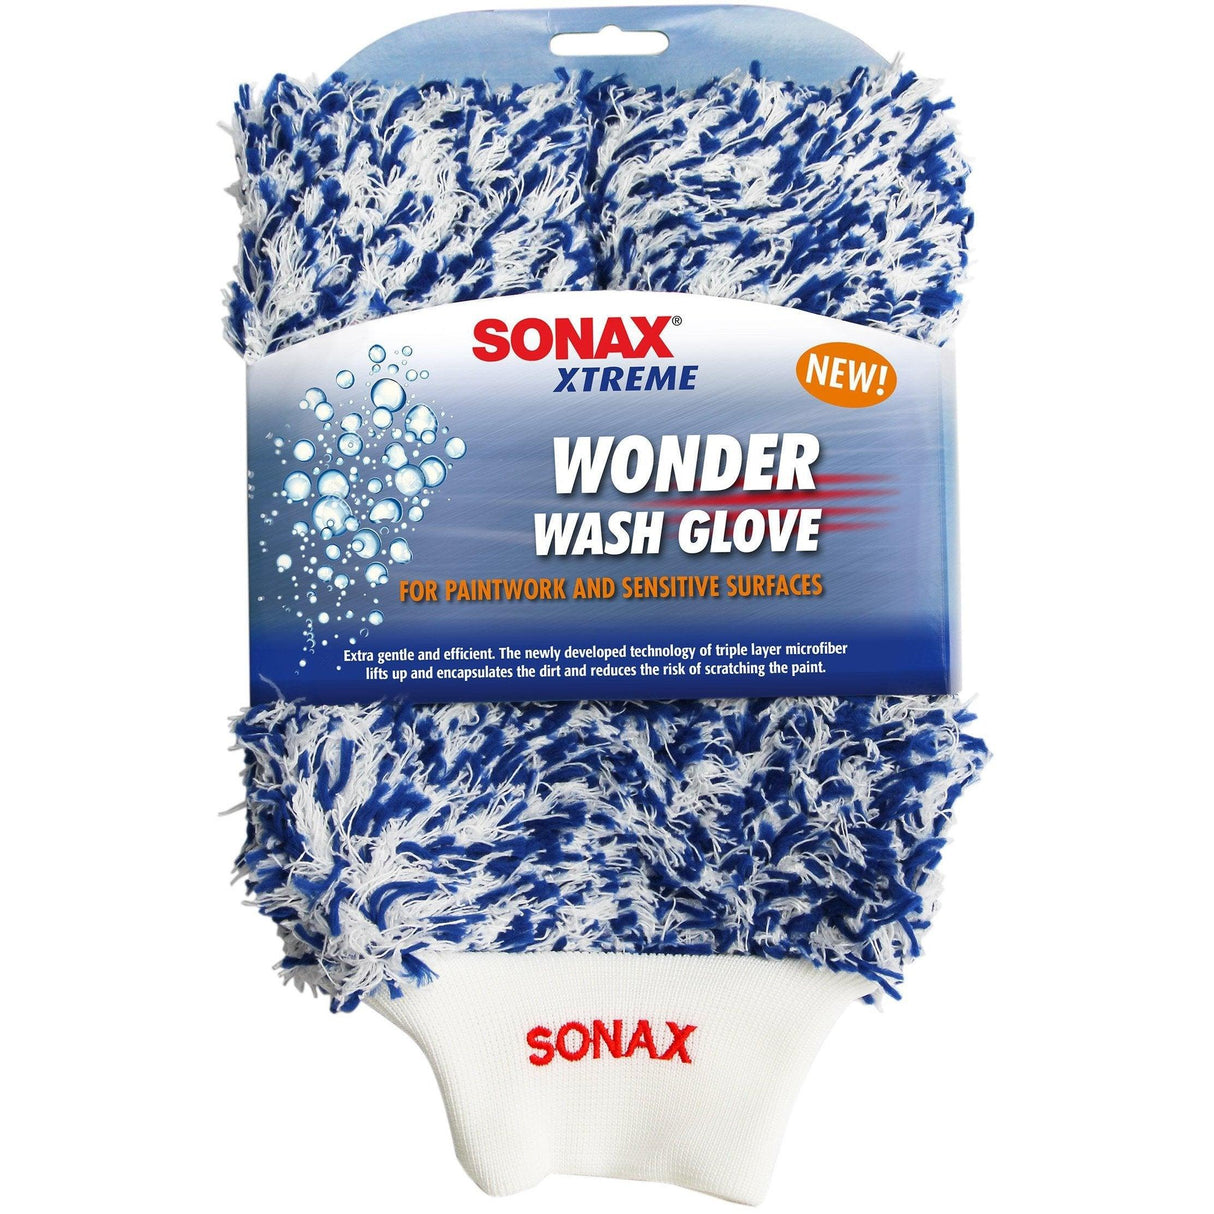 SONAX Xtreme Wonder Wash Glove - Xpert Cleaning